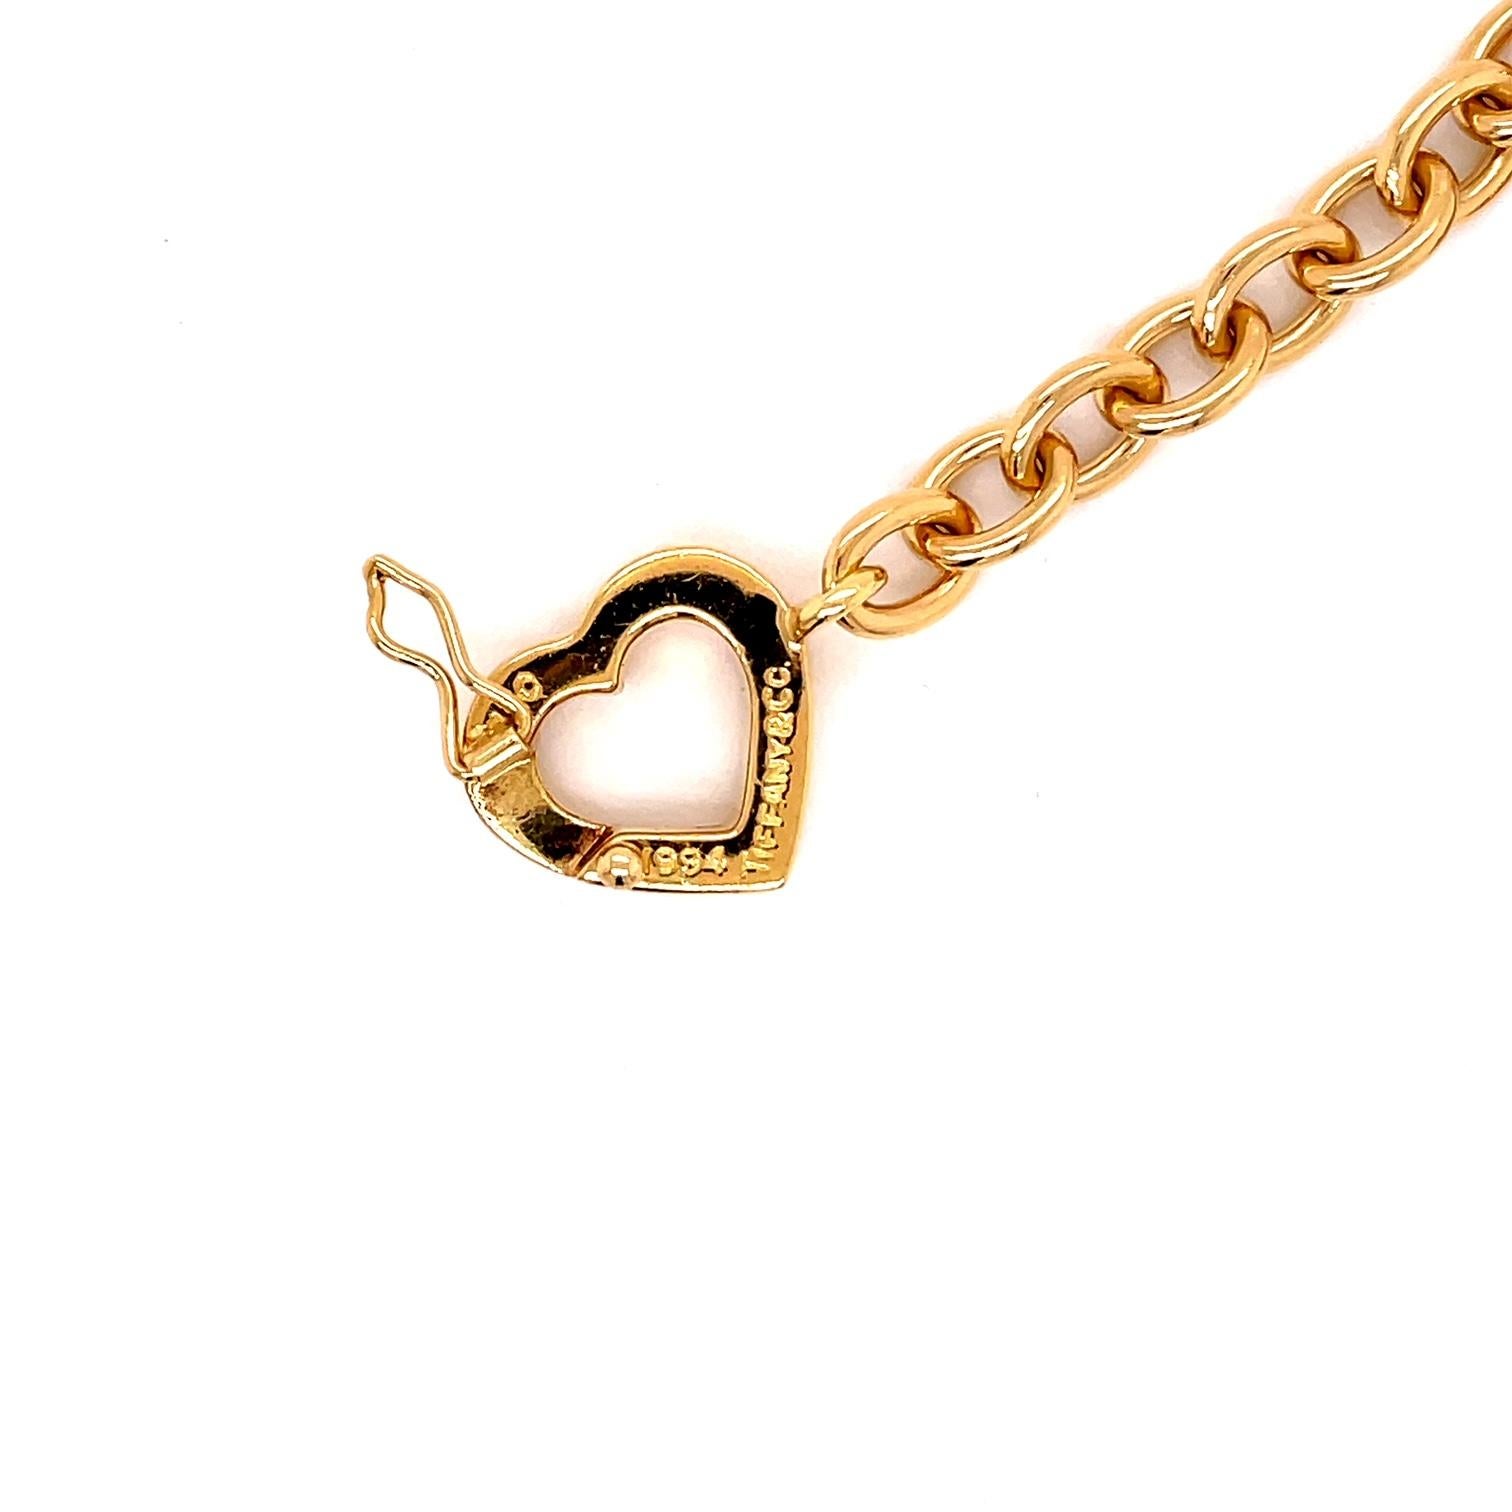 Tiffany's Vintage 1994 18 Karat Yellow Gold Heart and Arrow Bracelet For Sale 1